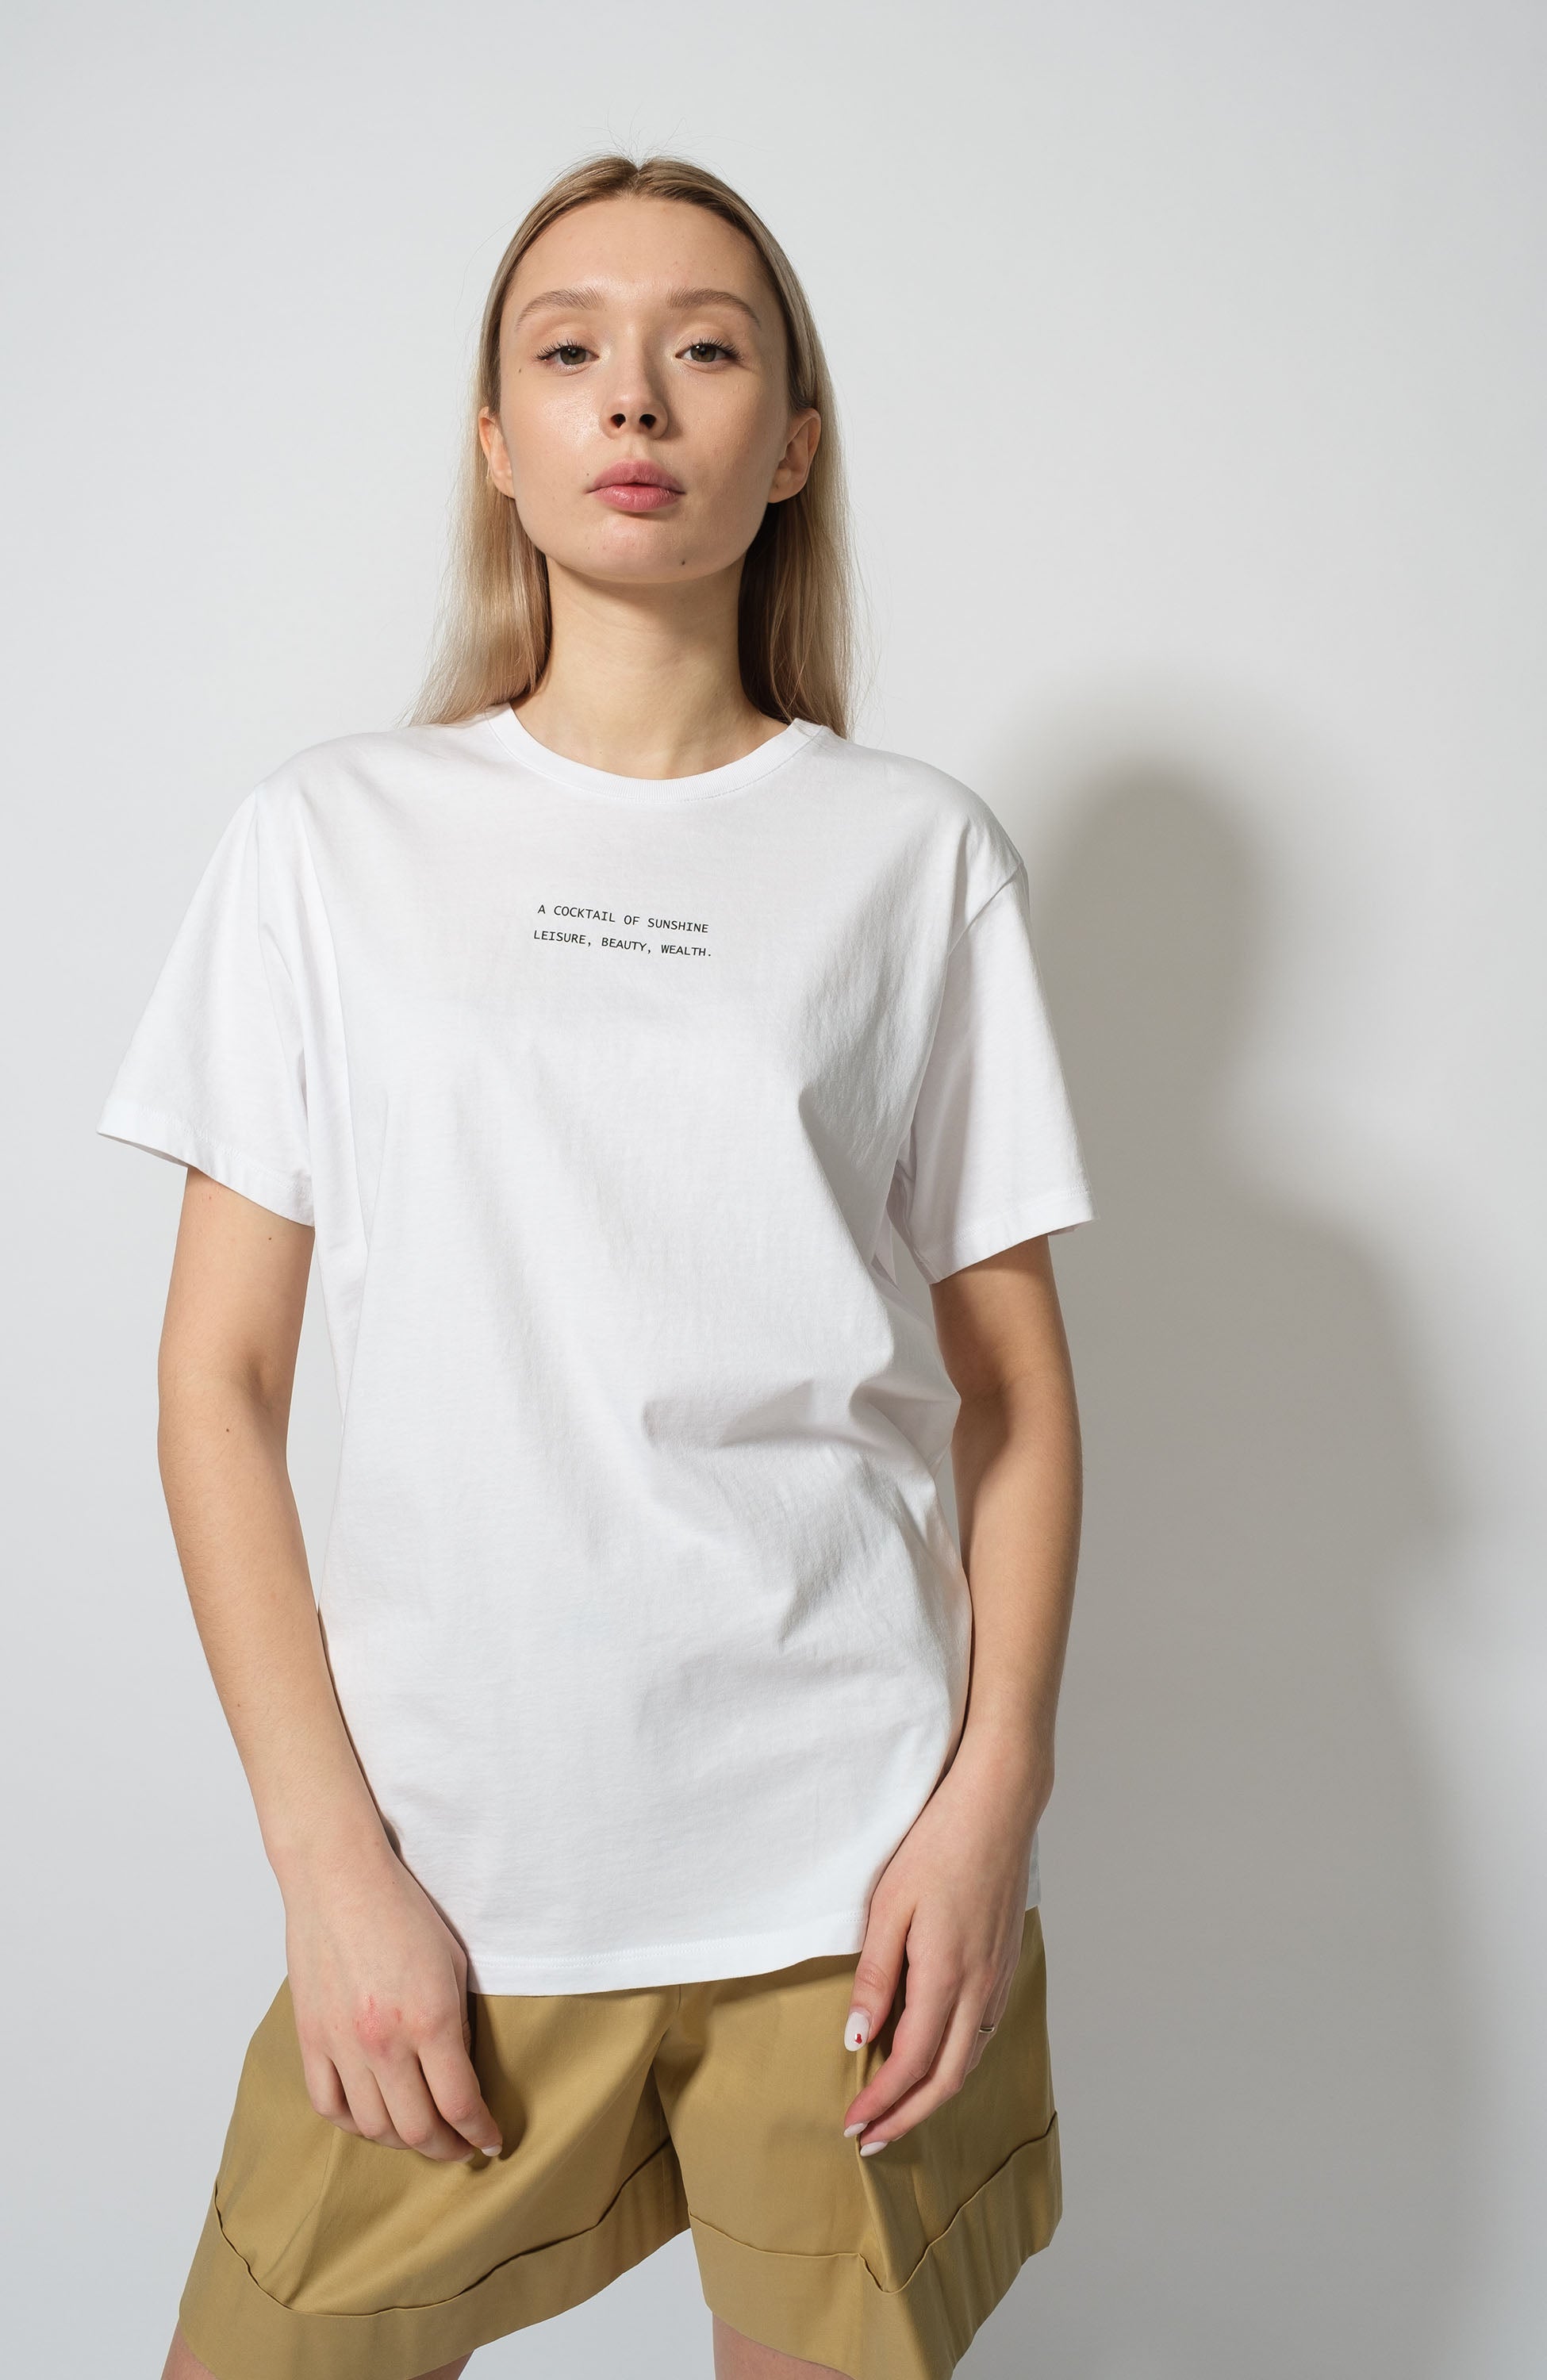 Printed t-shirt ERIKA CAVALLINI for women